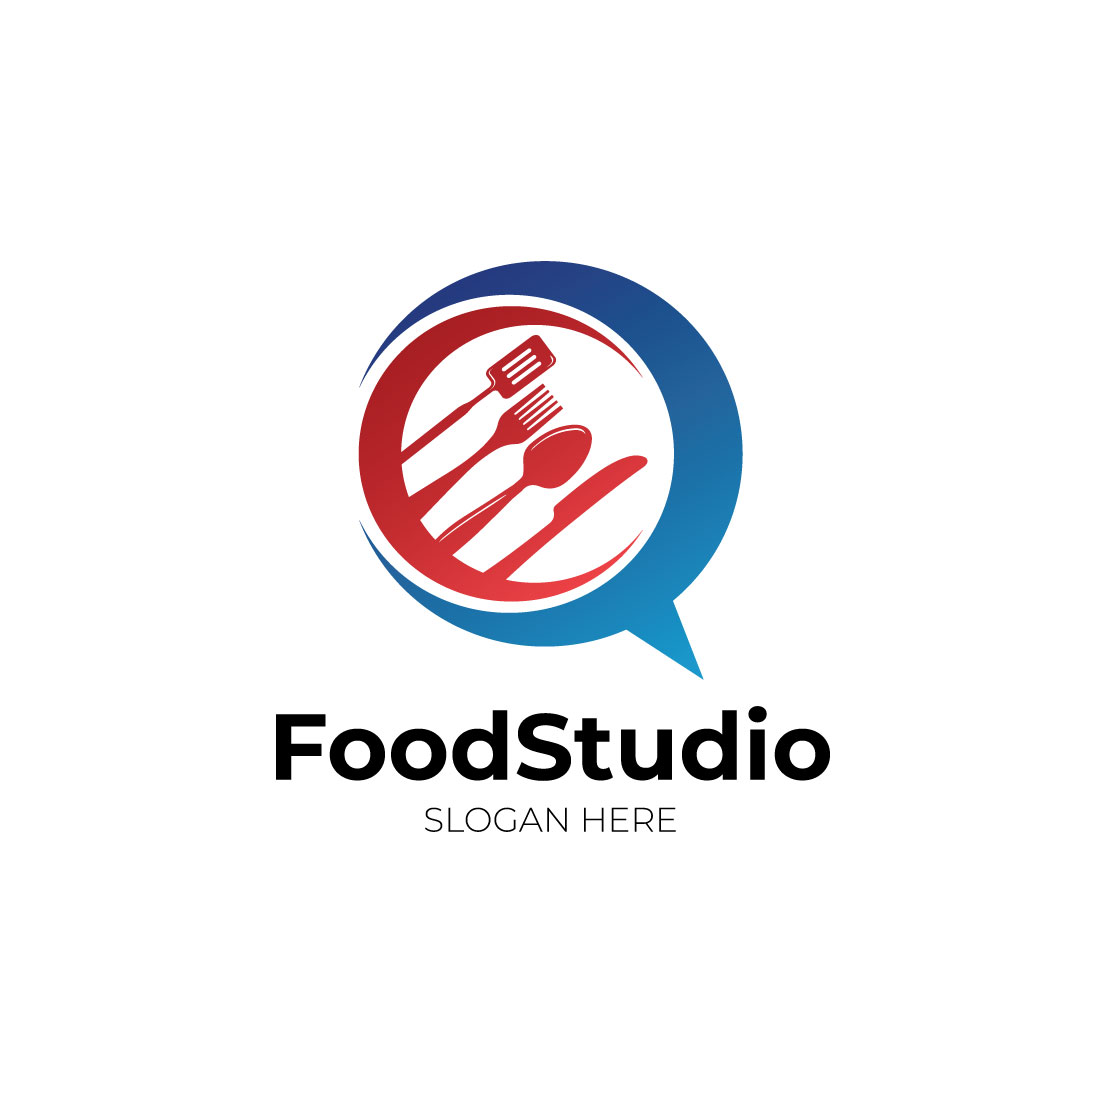 Food studio vector logo Cooking logo Restaurant vector logo design cover image.